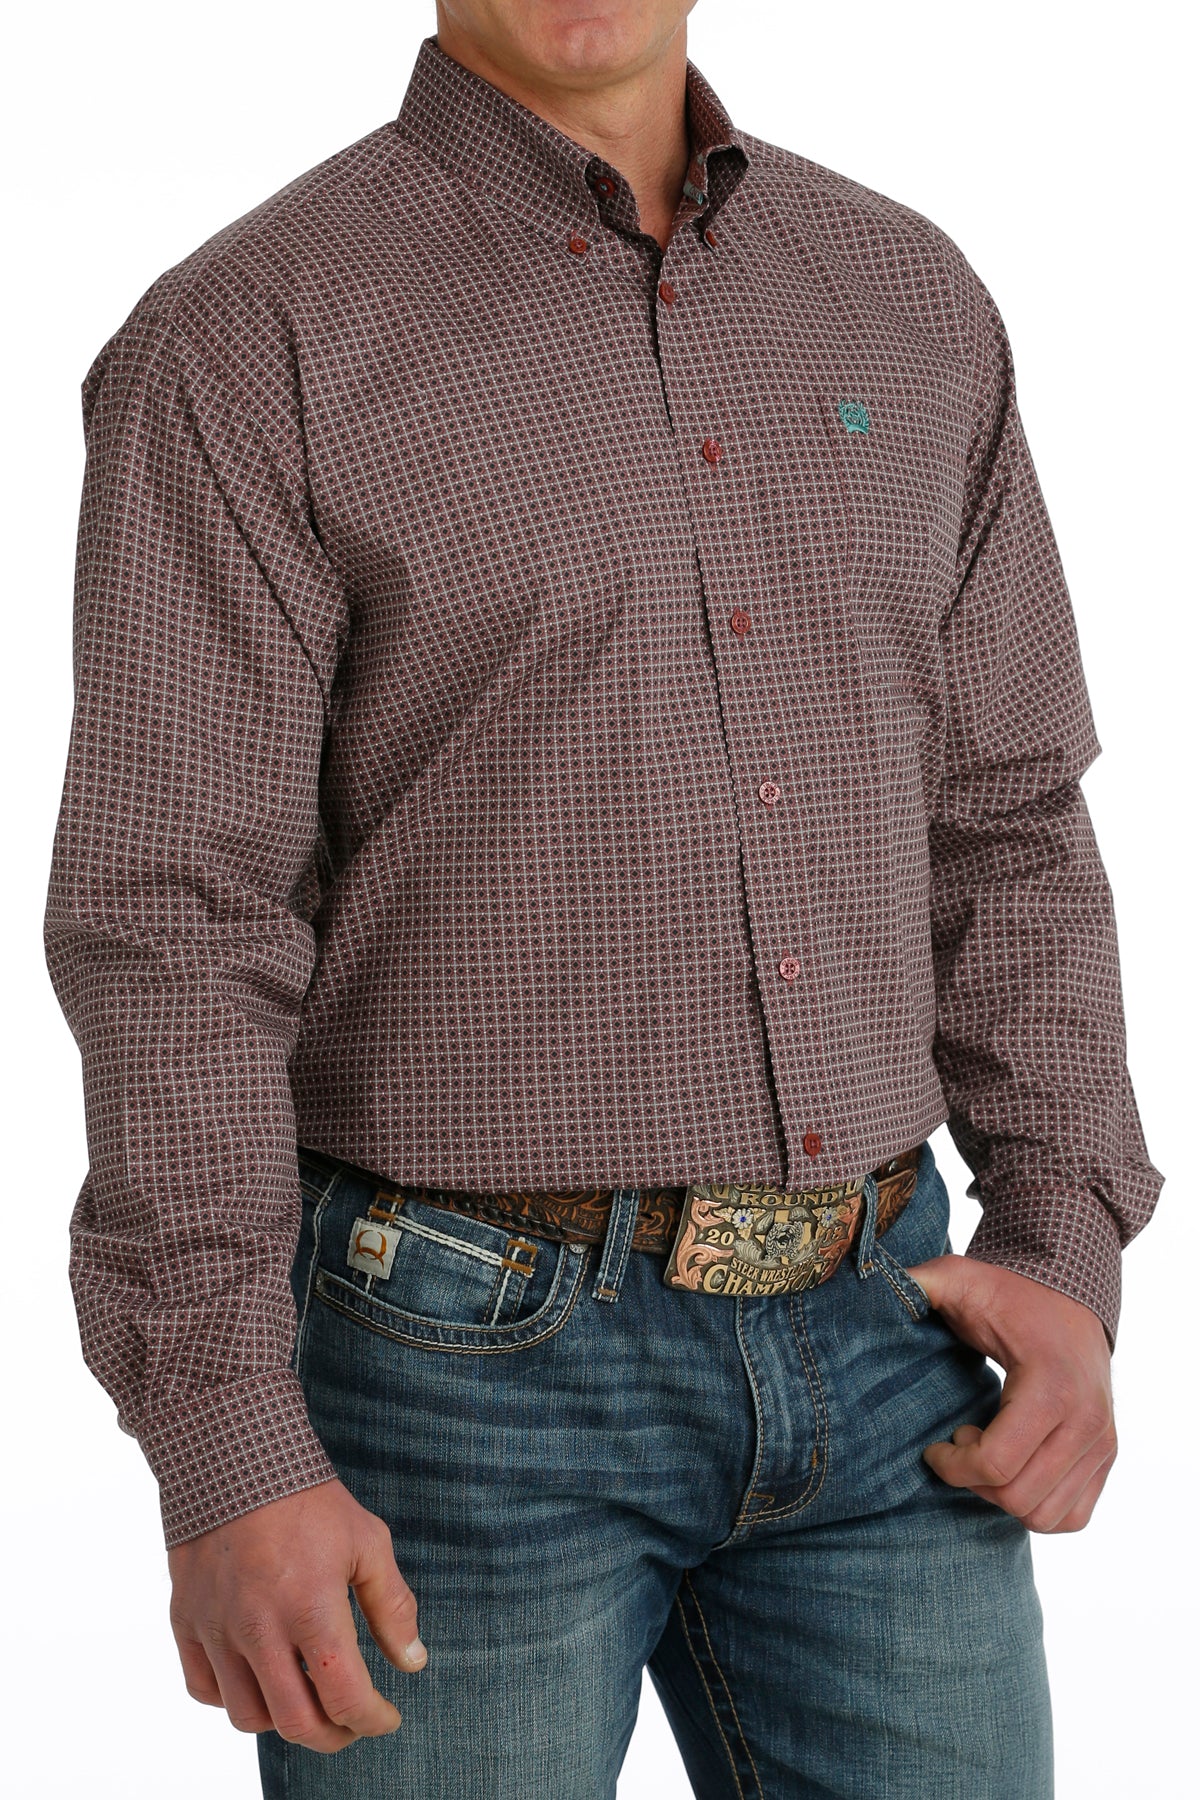 Men's Long Sleeve Shirts - Bear Creek Western Store